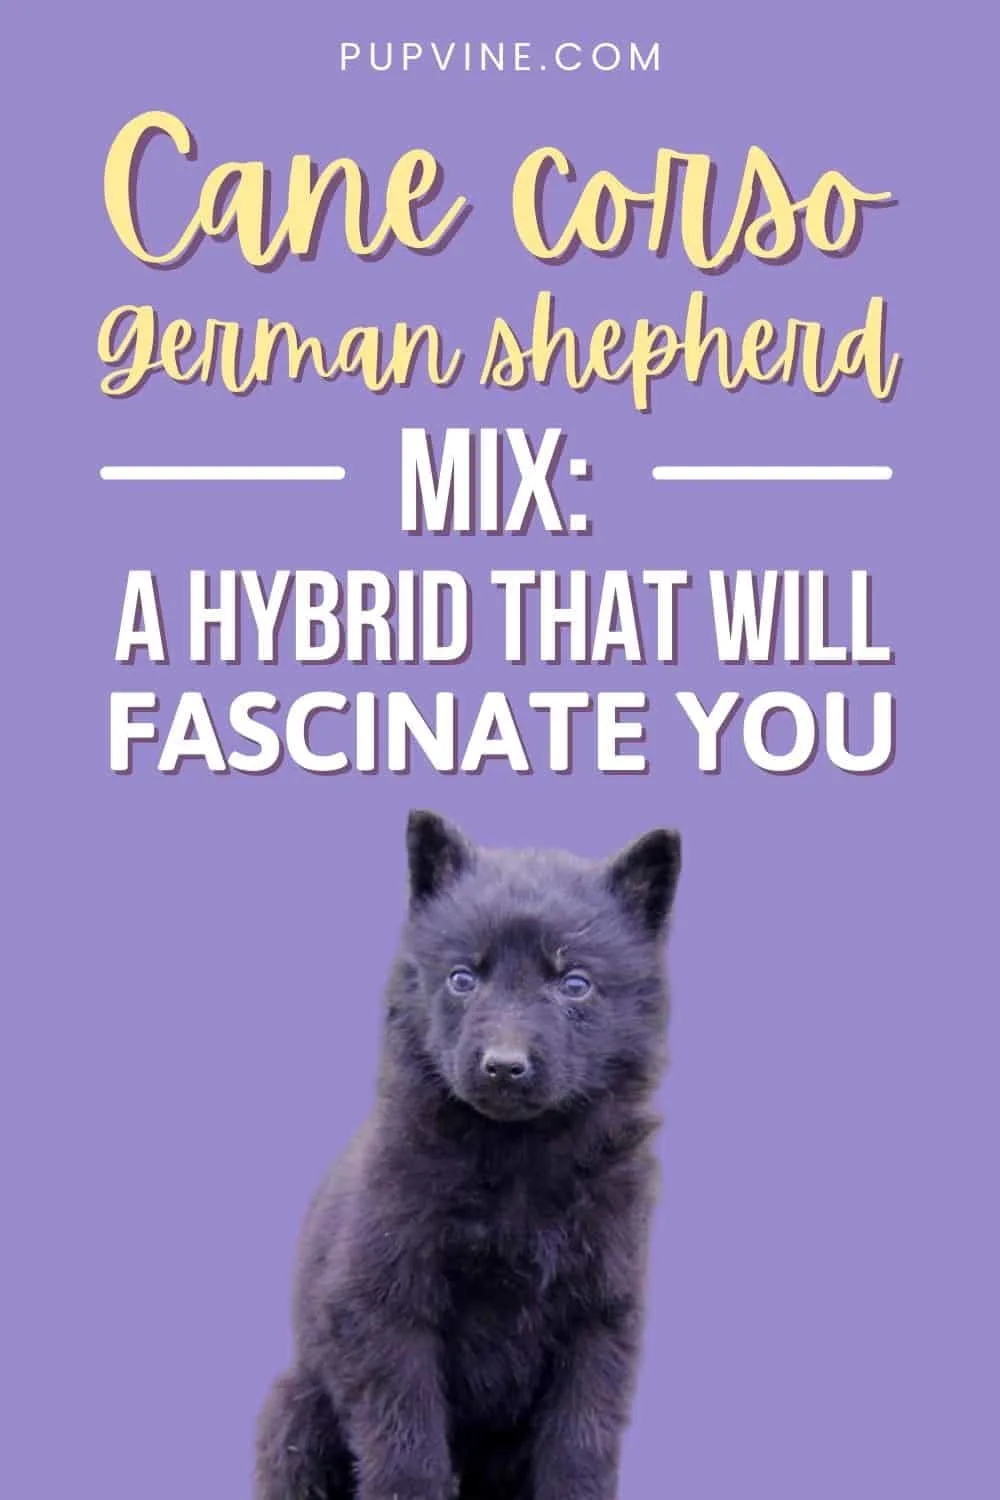 Cane Corso German Shepherd Mix: A Hybrid That Will Fascinate You